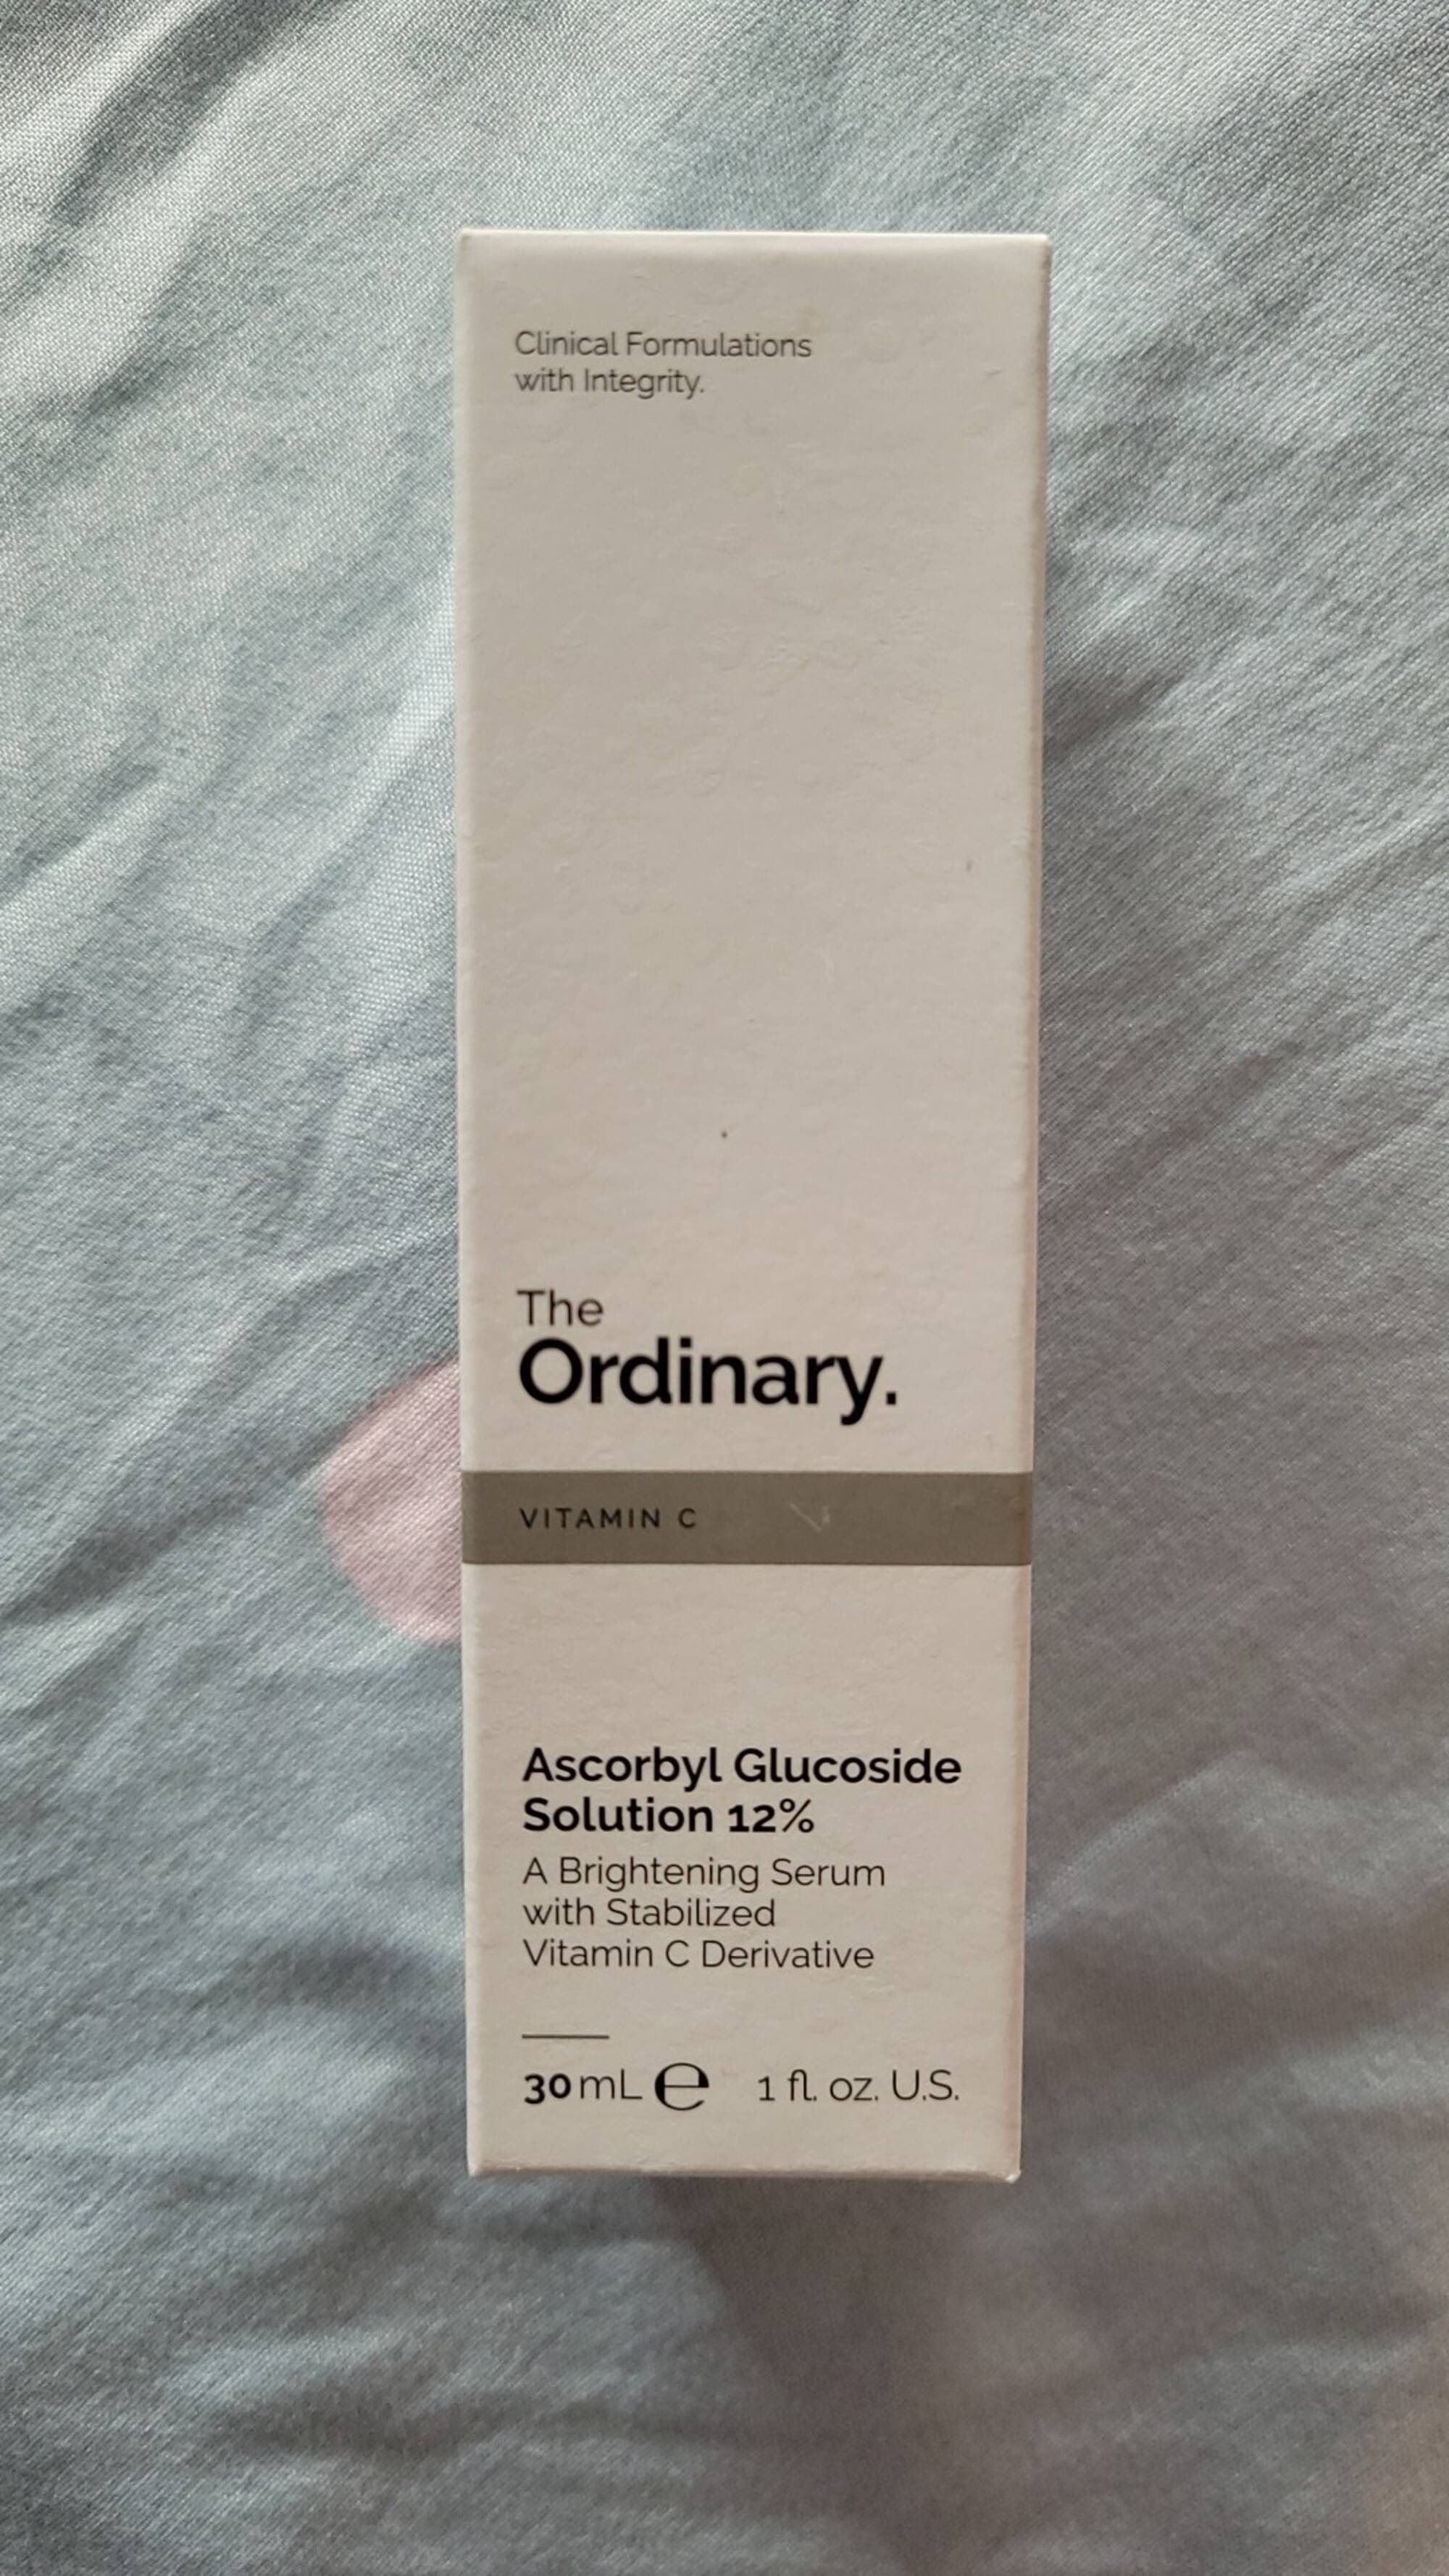 THE ORDINARY - Ascorbyl glucoside solution 12%